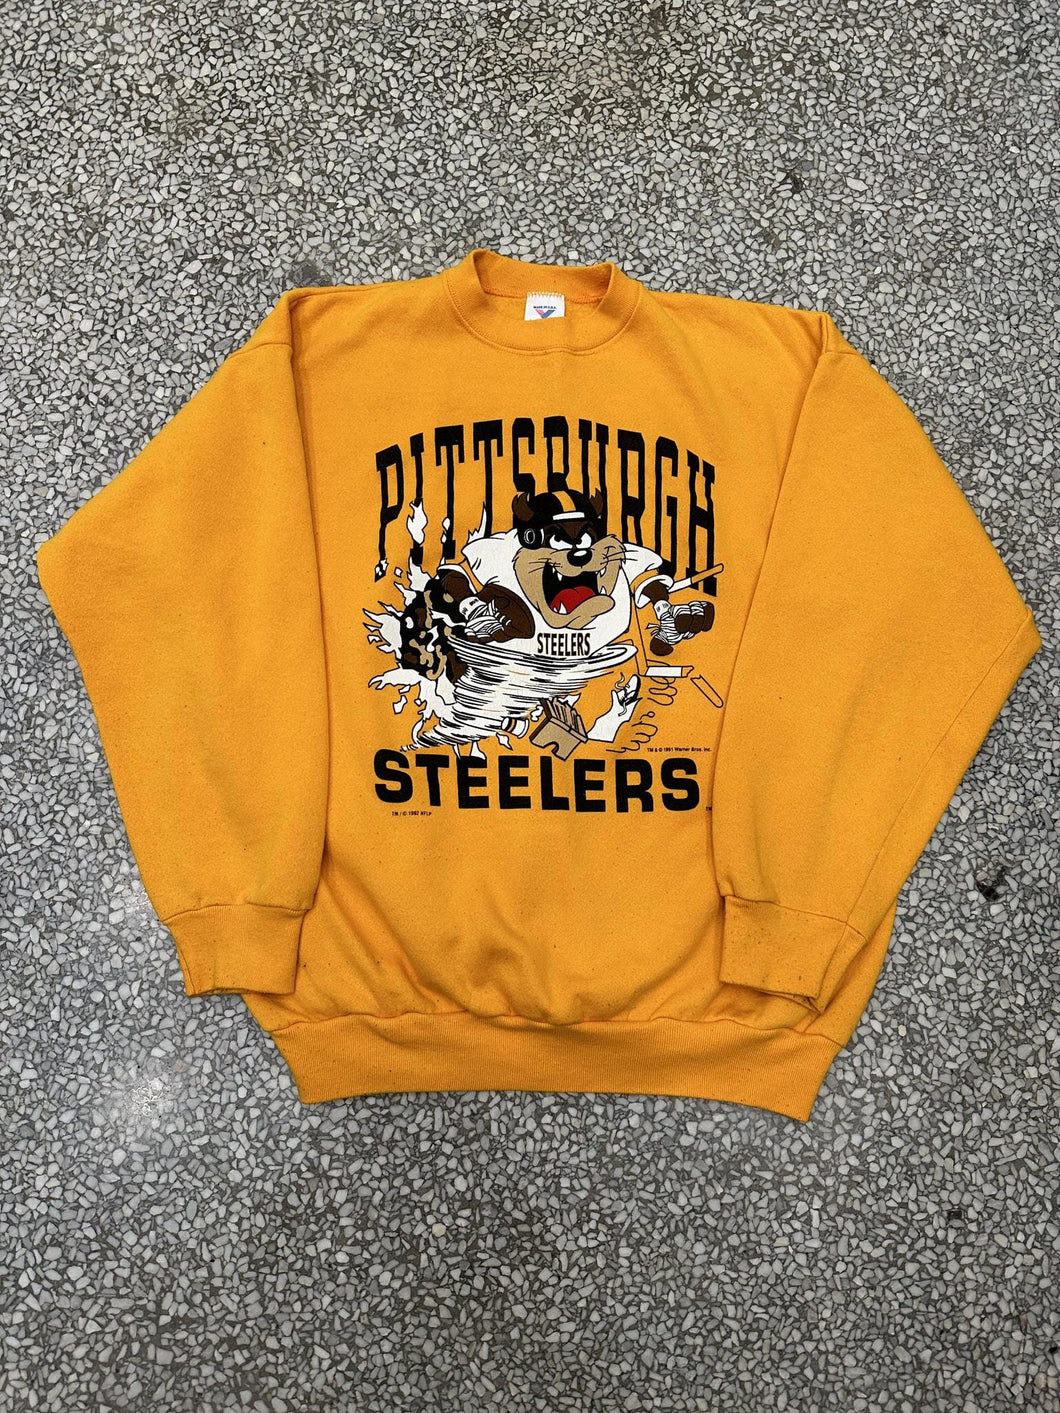 Pittsburgh Steelers Vintage 1992 Taz Crewneck Gold ABC Vintage 